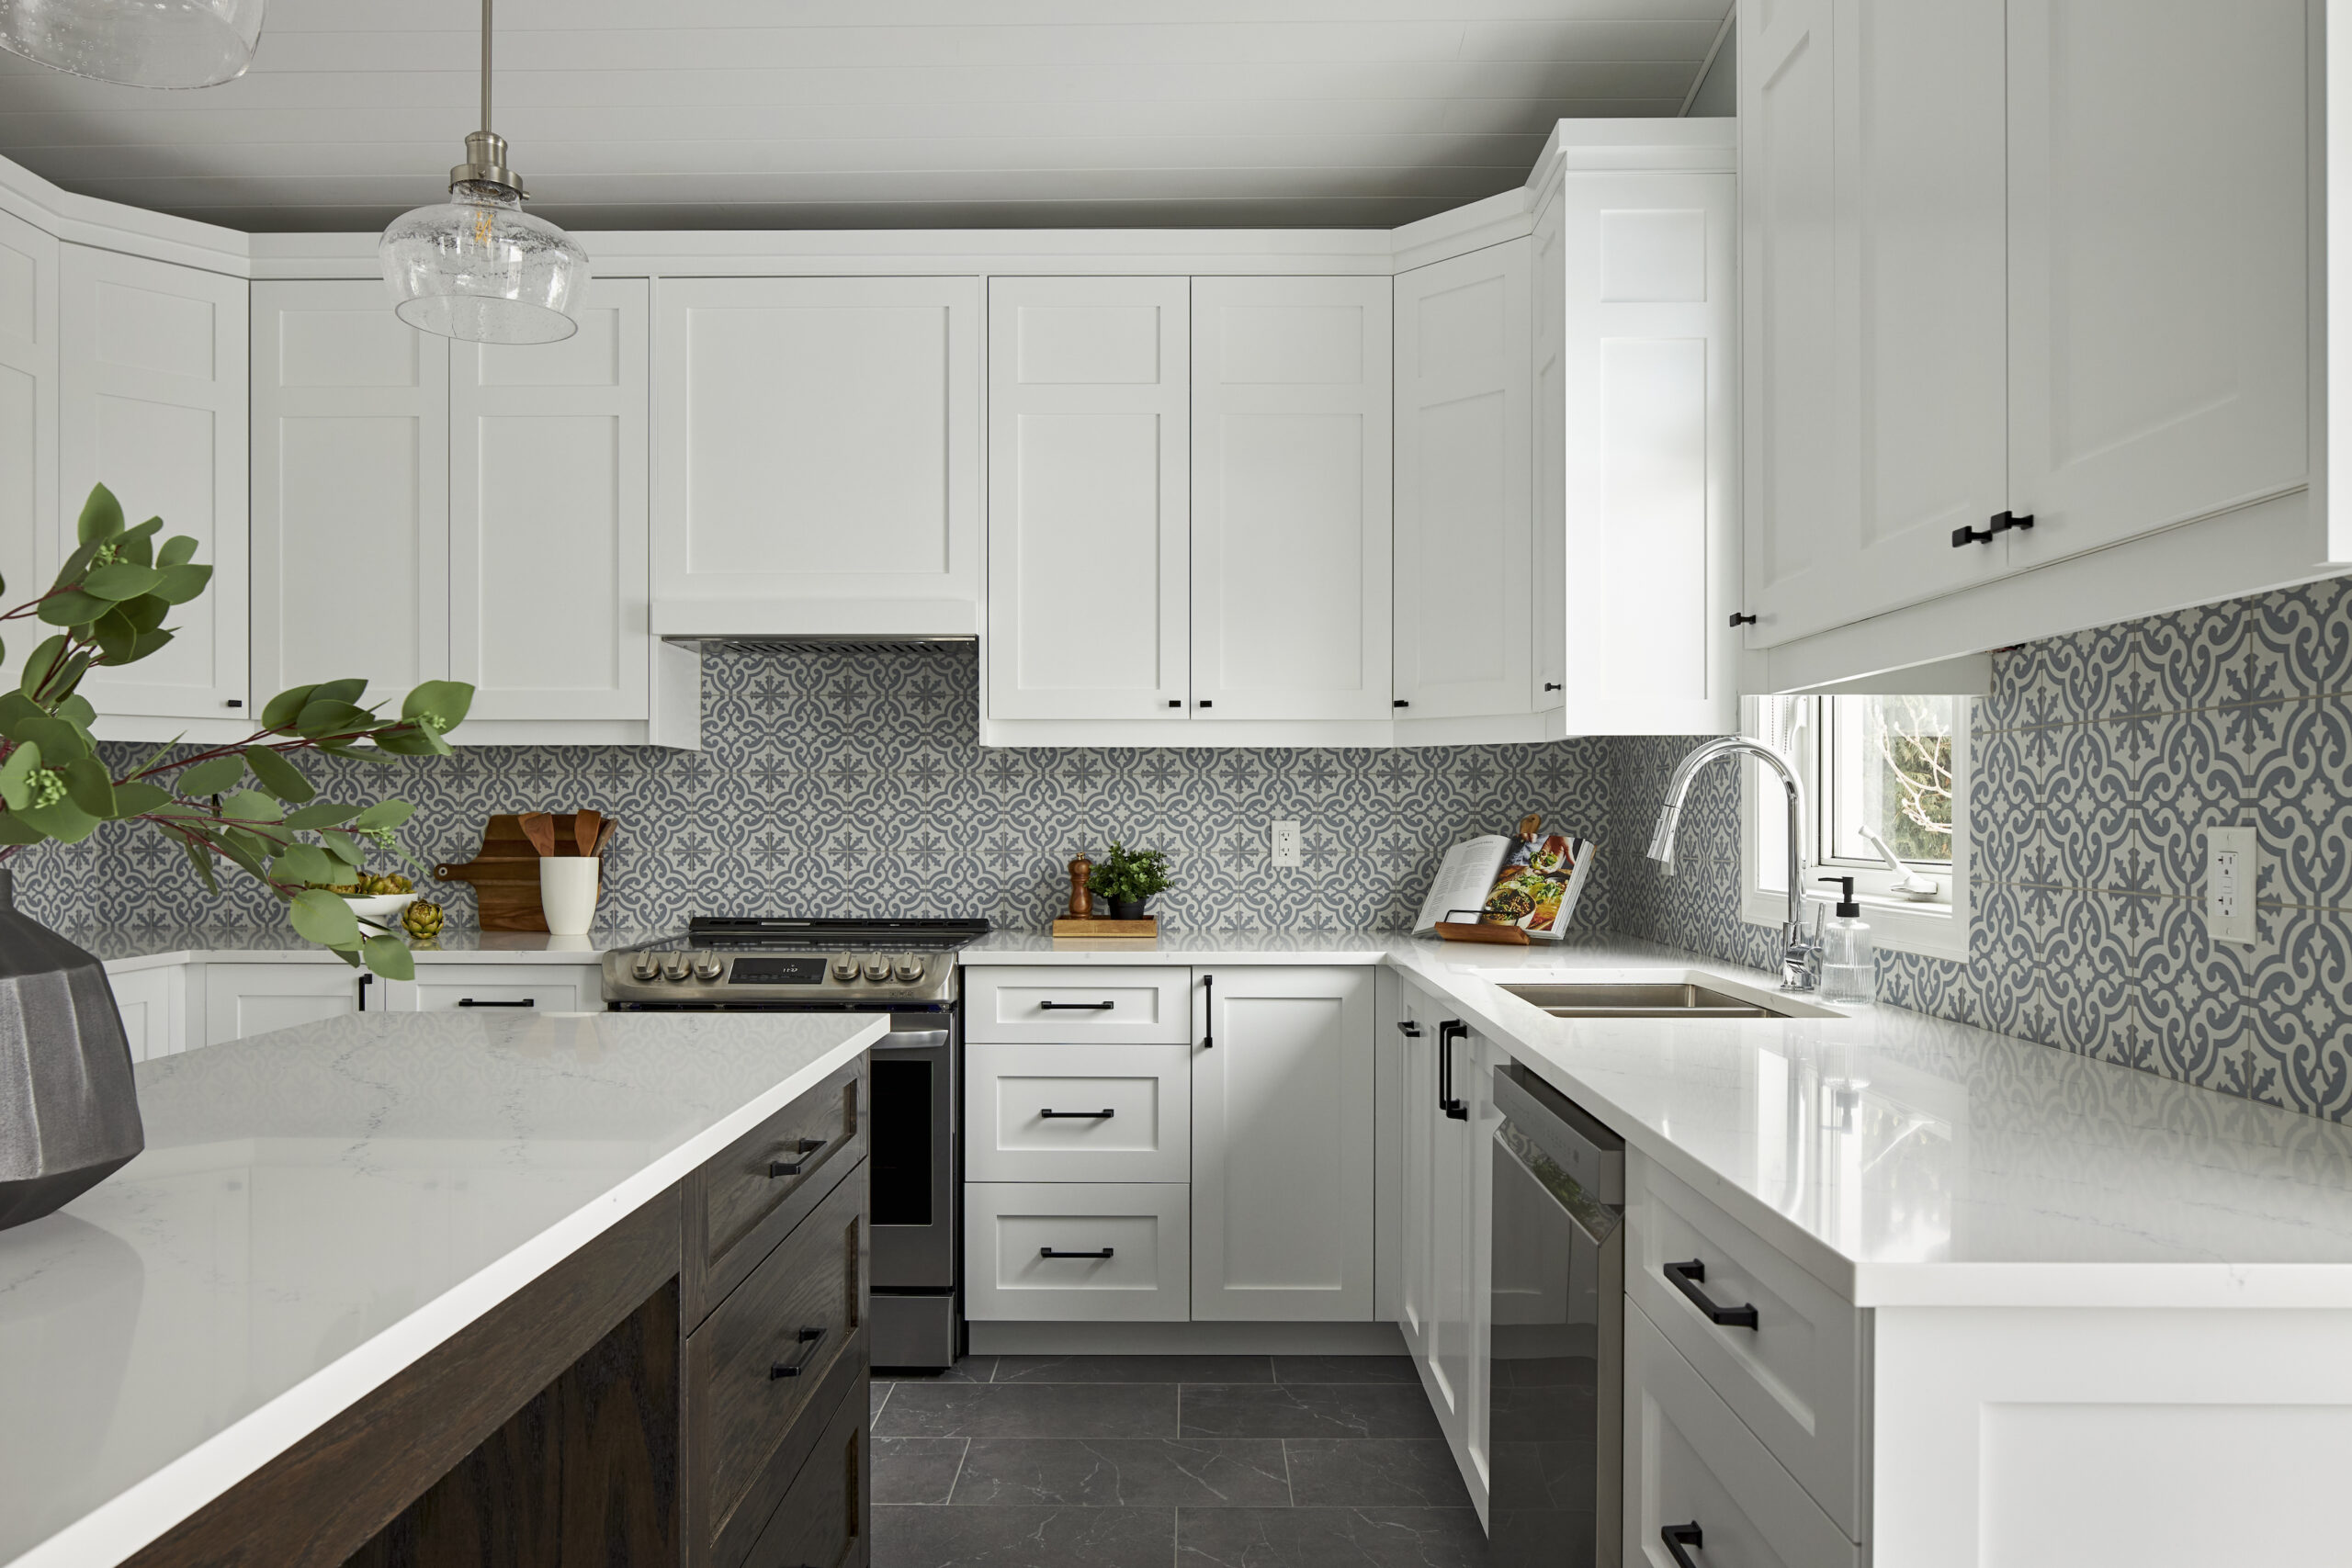 Designer kitchen renovation with white cabinetry and patterned backsplash.